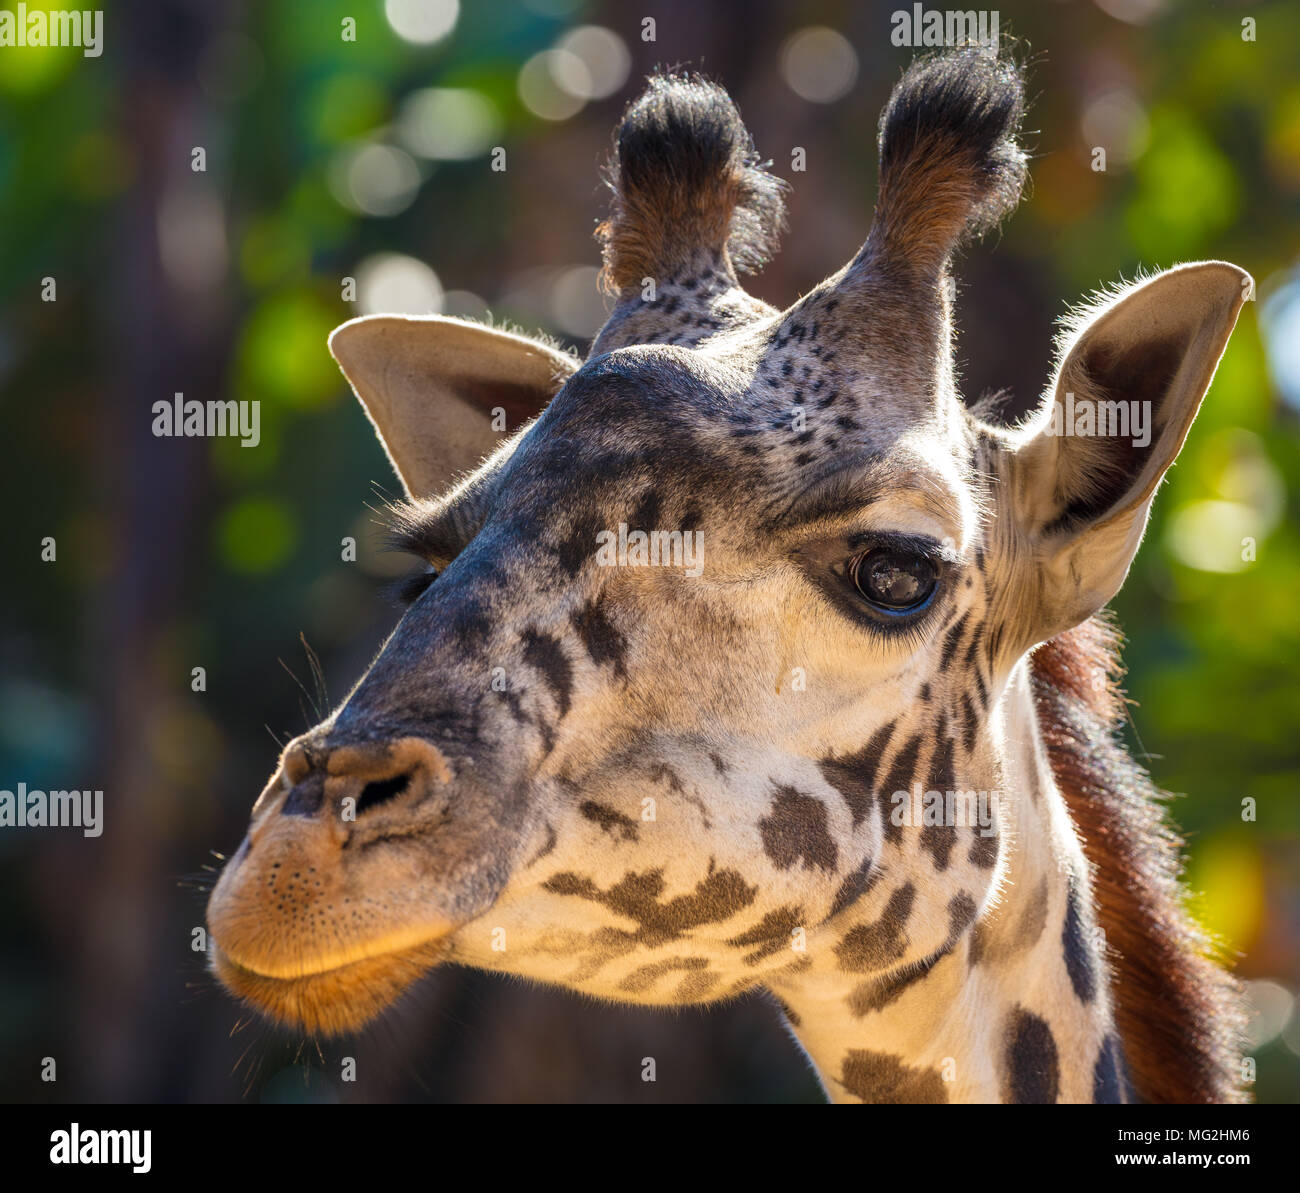 curious giraffe poses Stock Photo